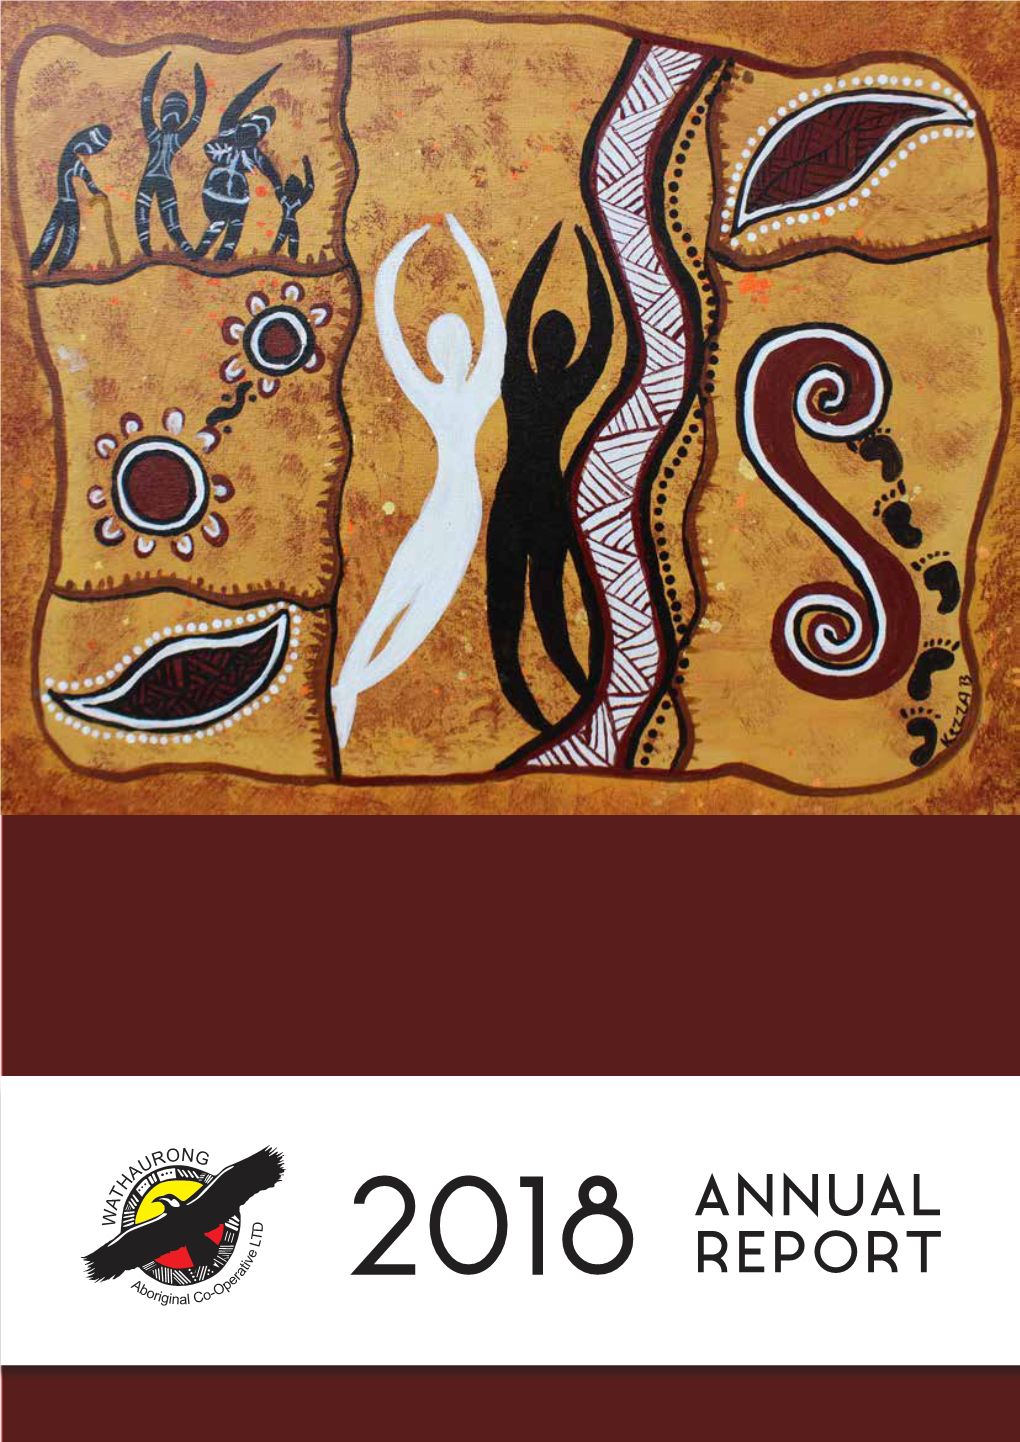 ANNUAL REPORT Wathaurong Aboriginal Co-Operative 2